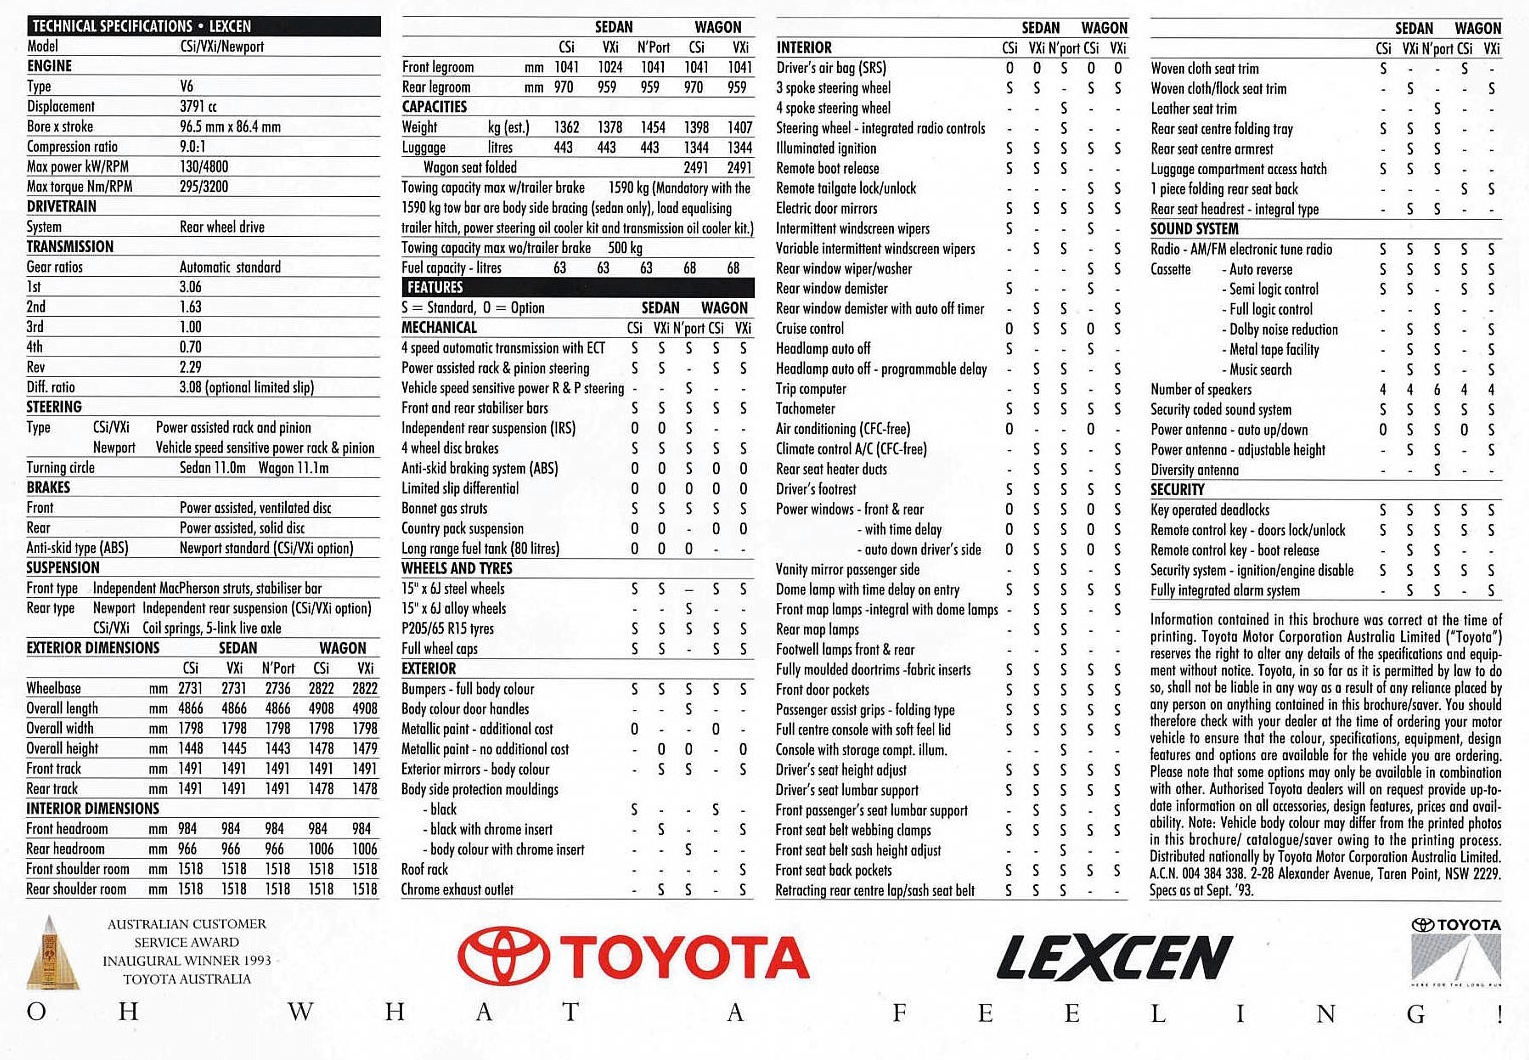 1994 Toyota Lexcen Brochure Page 9